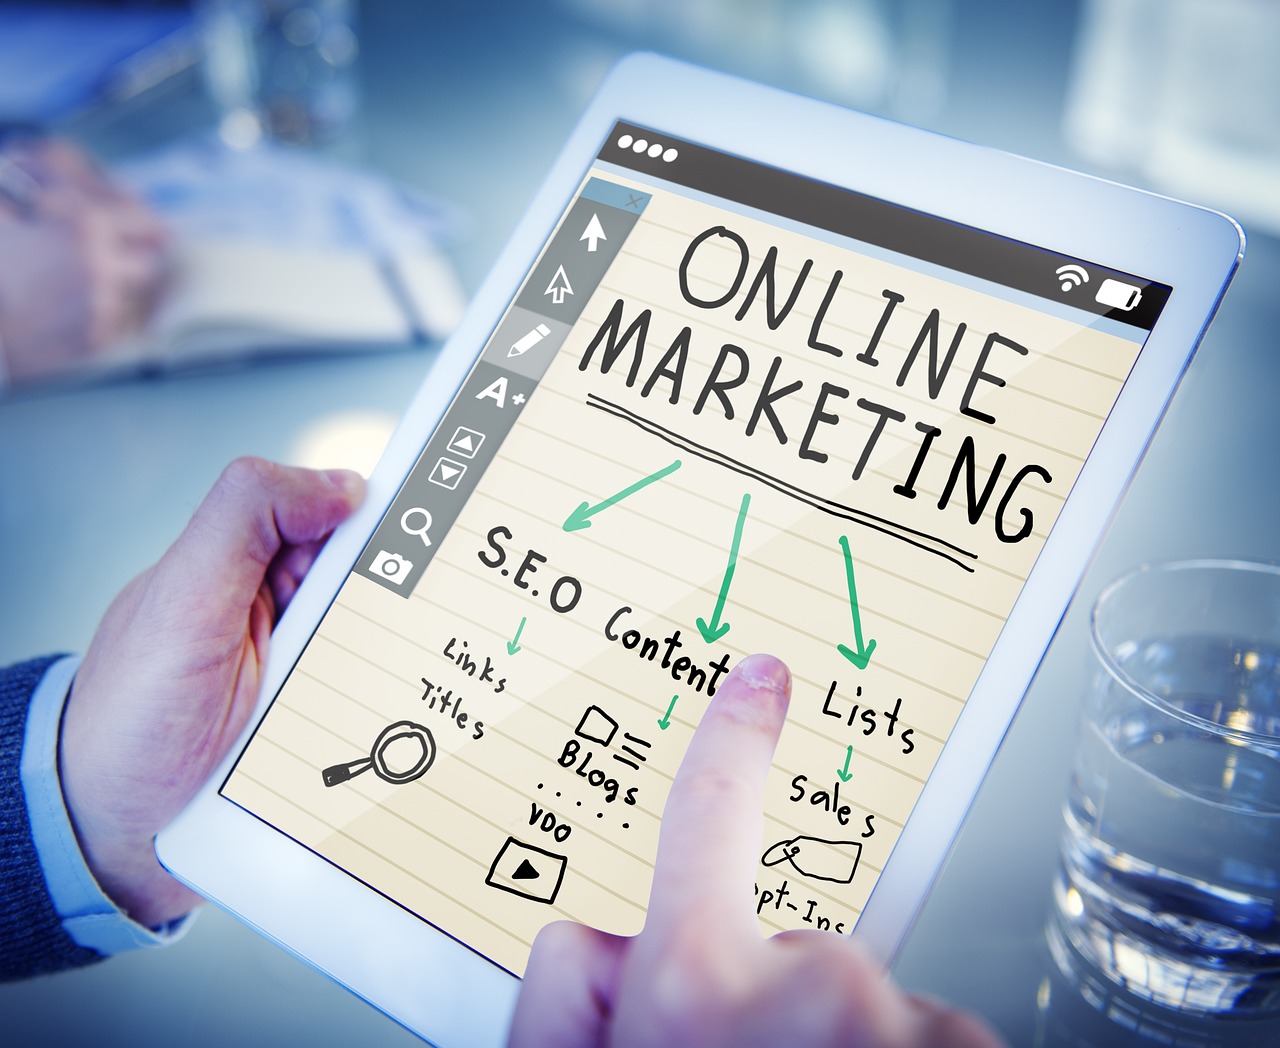 The Importance of Digital Marketing